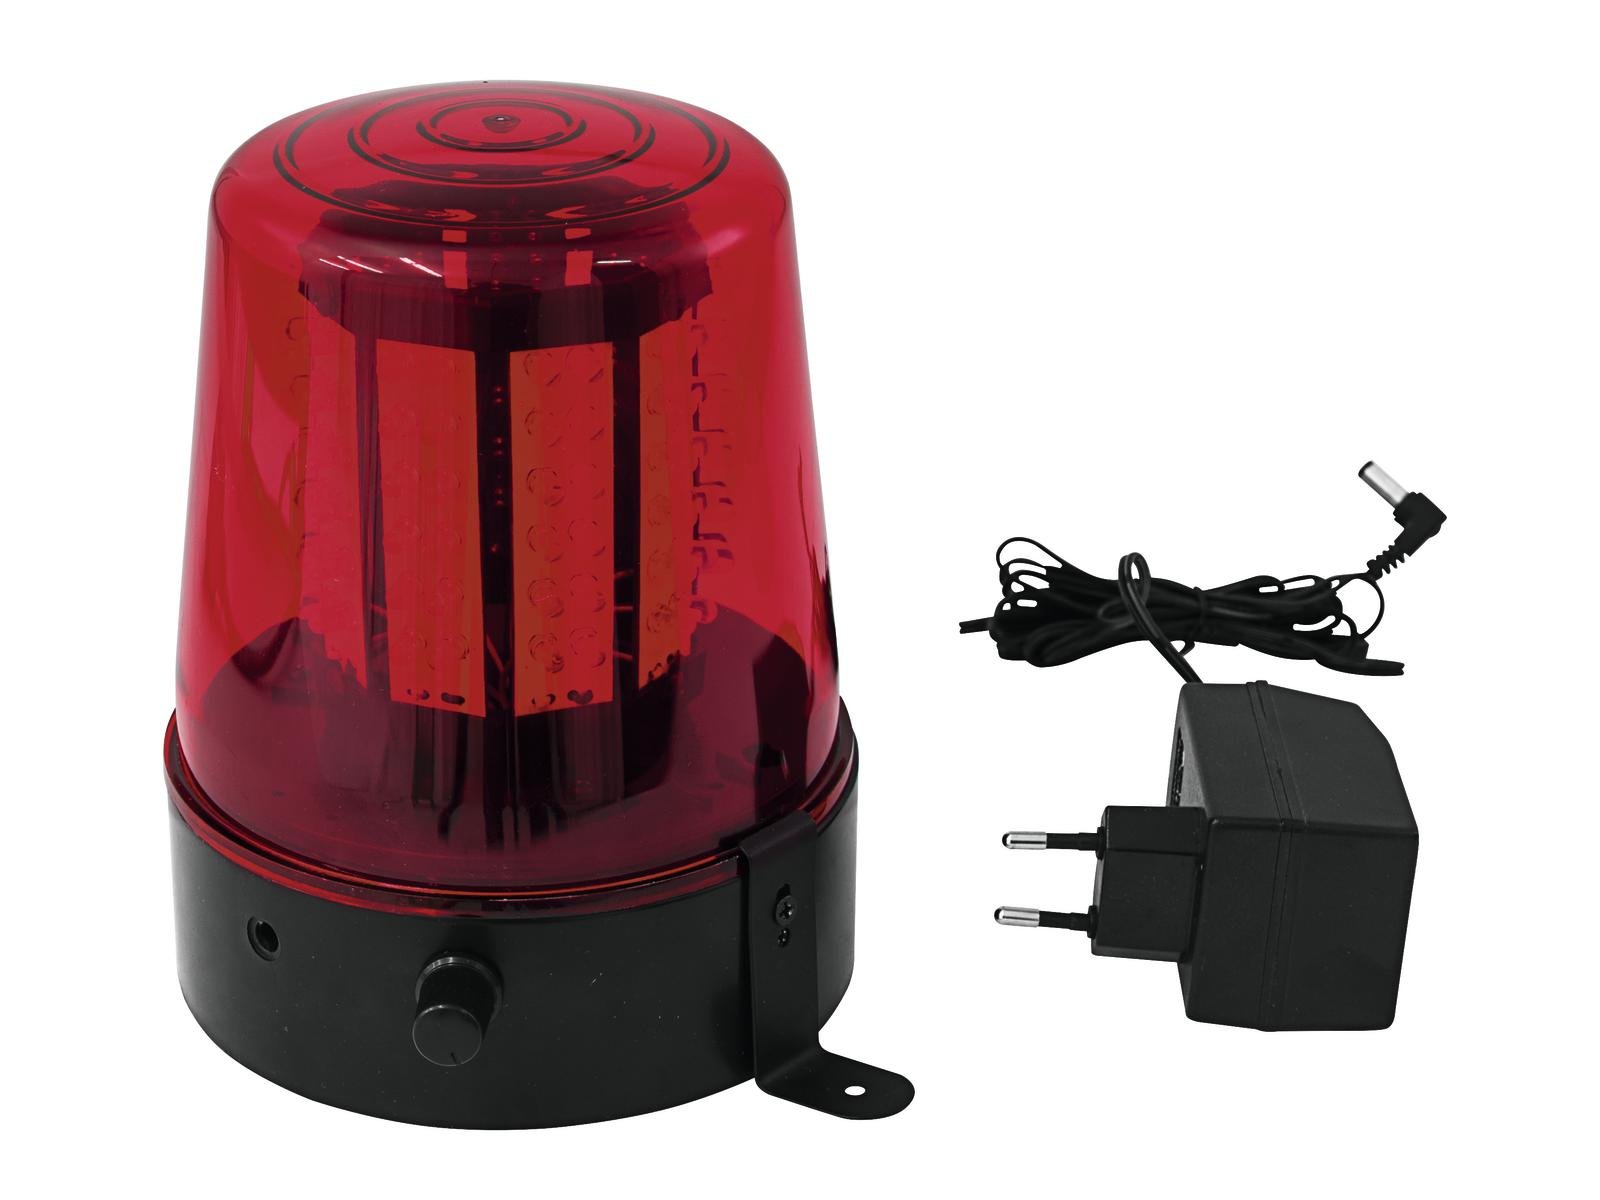 LED Polizeilicht 108 LEDs rot Classic